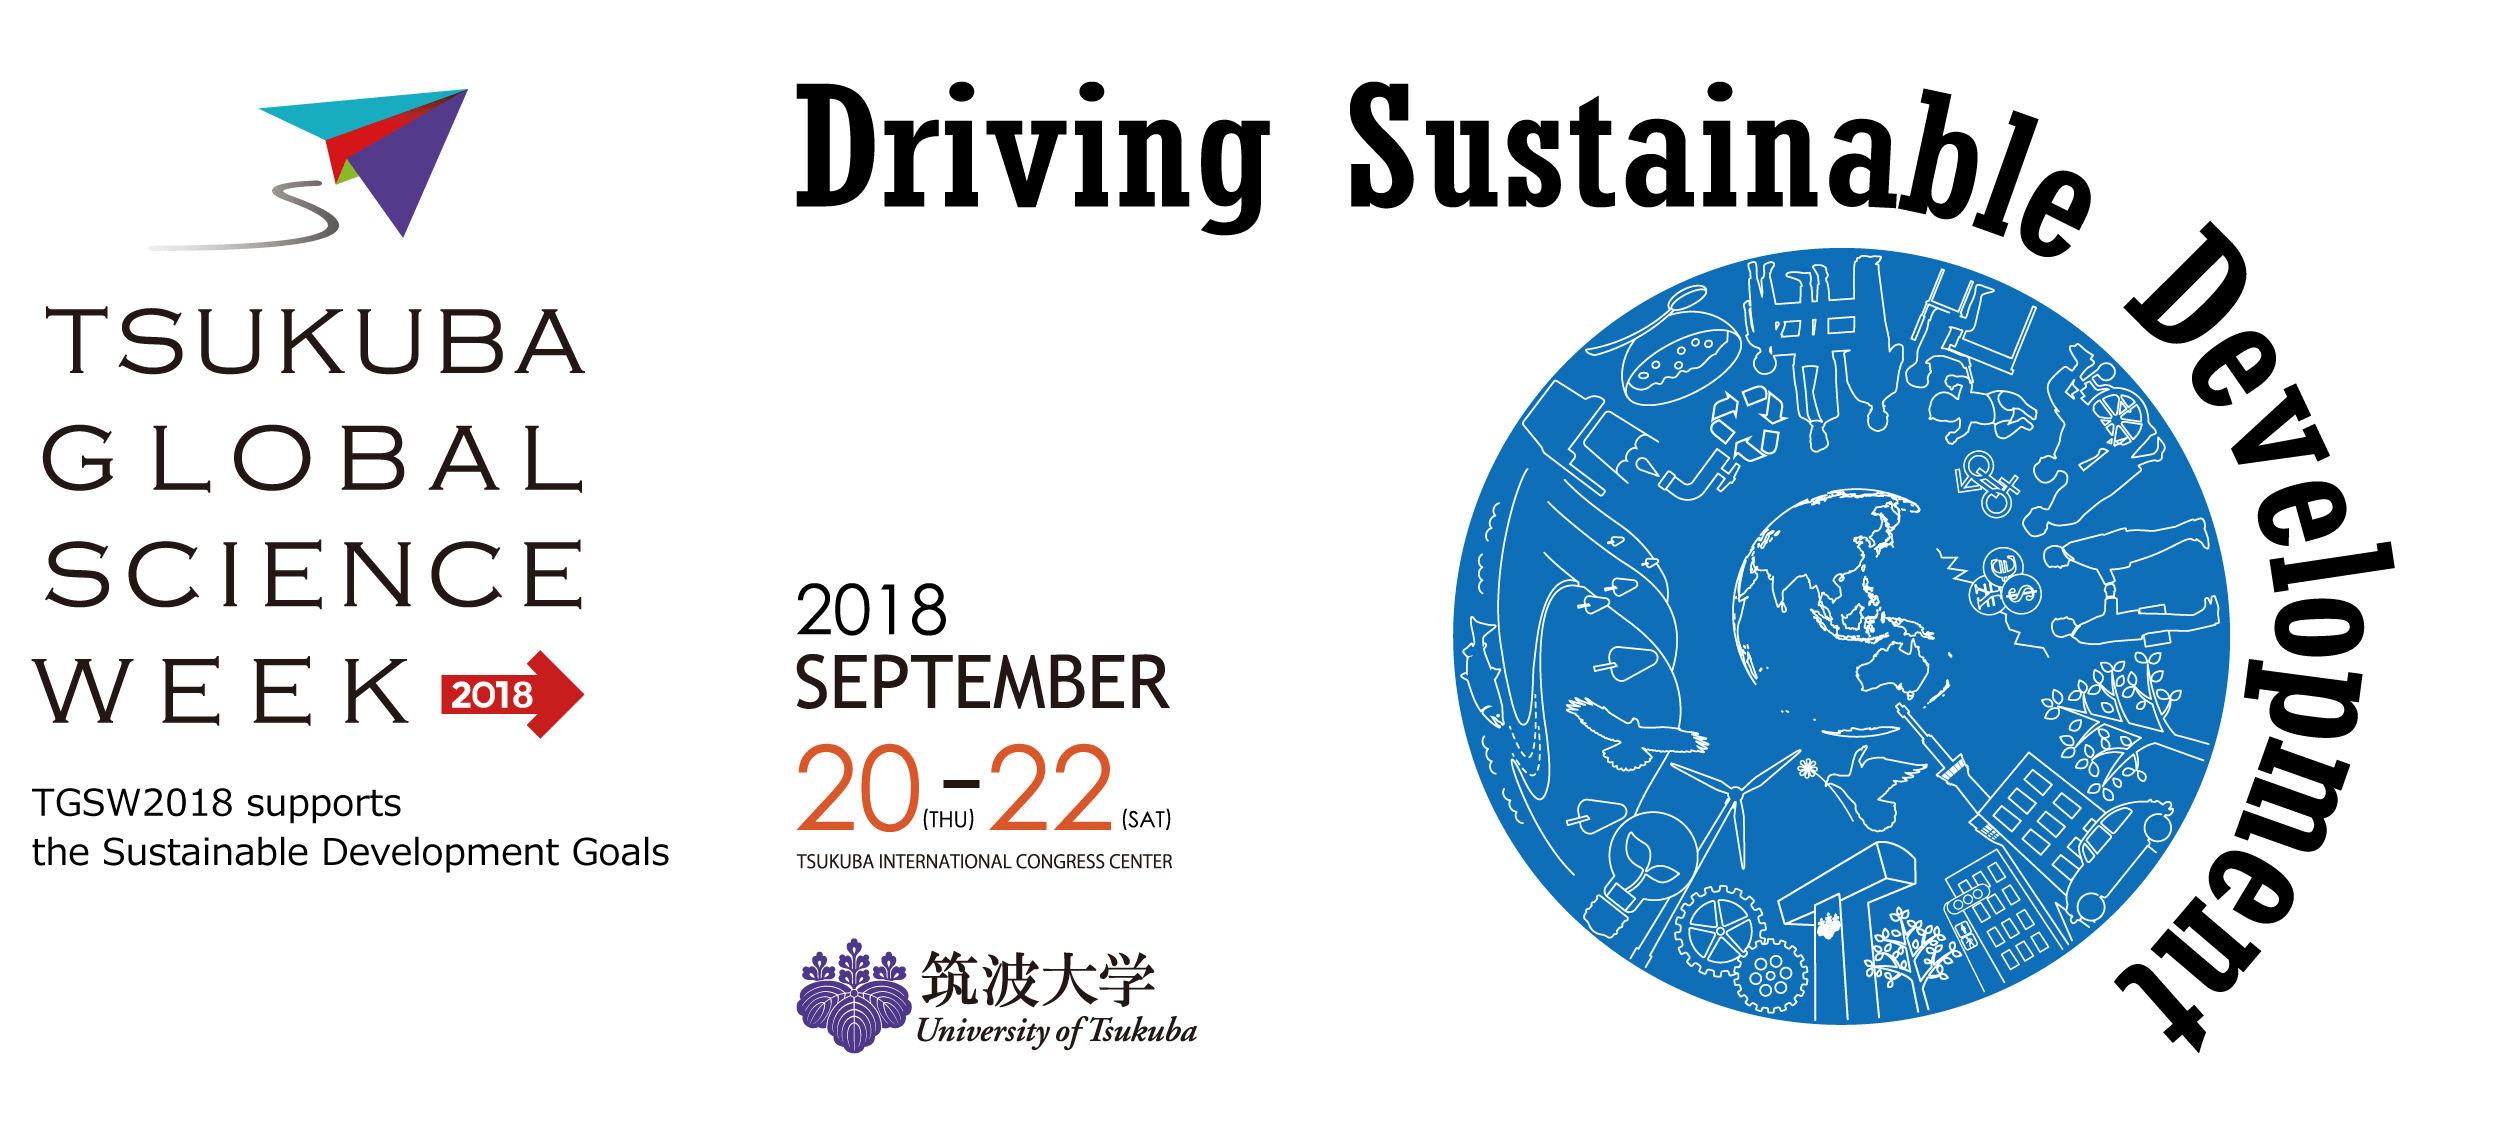 Driving Sustainable Development